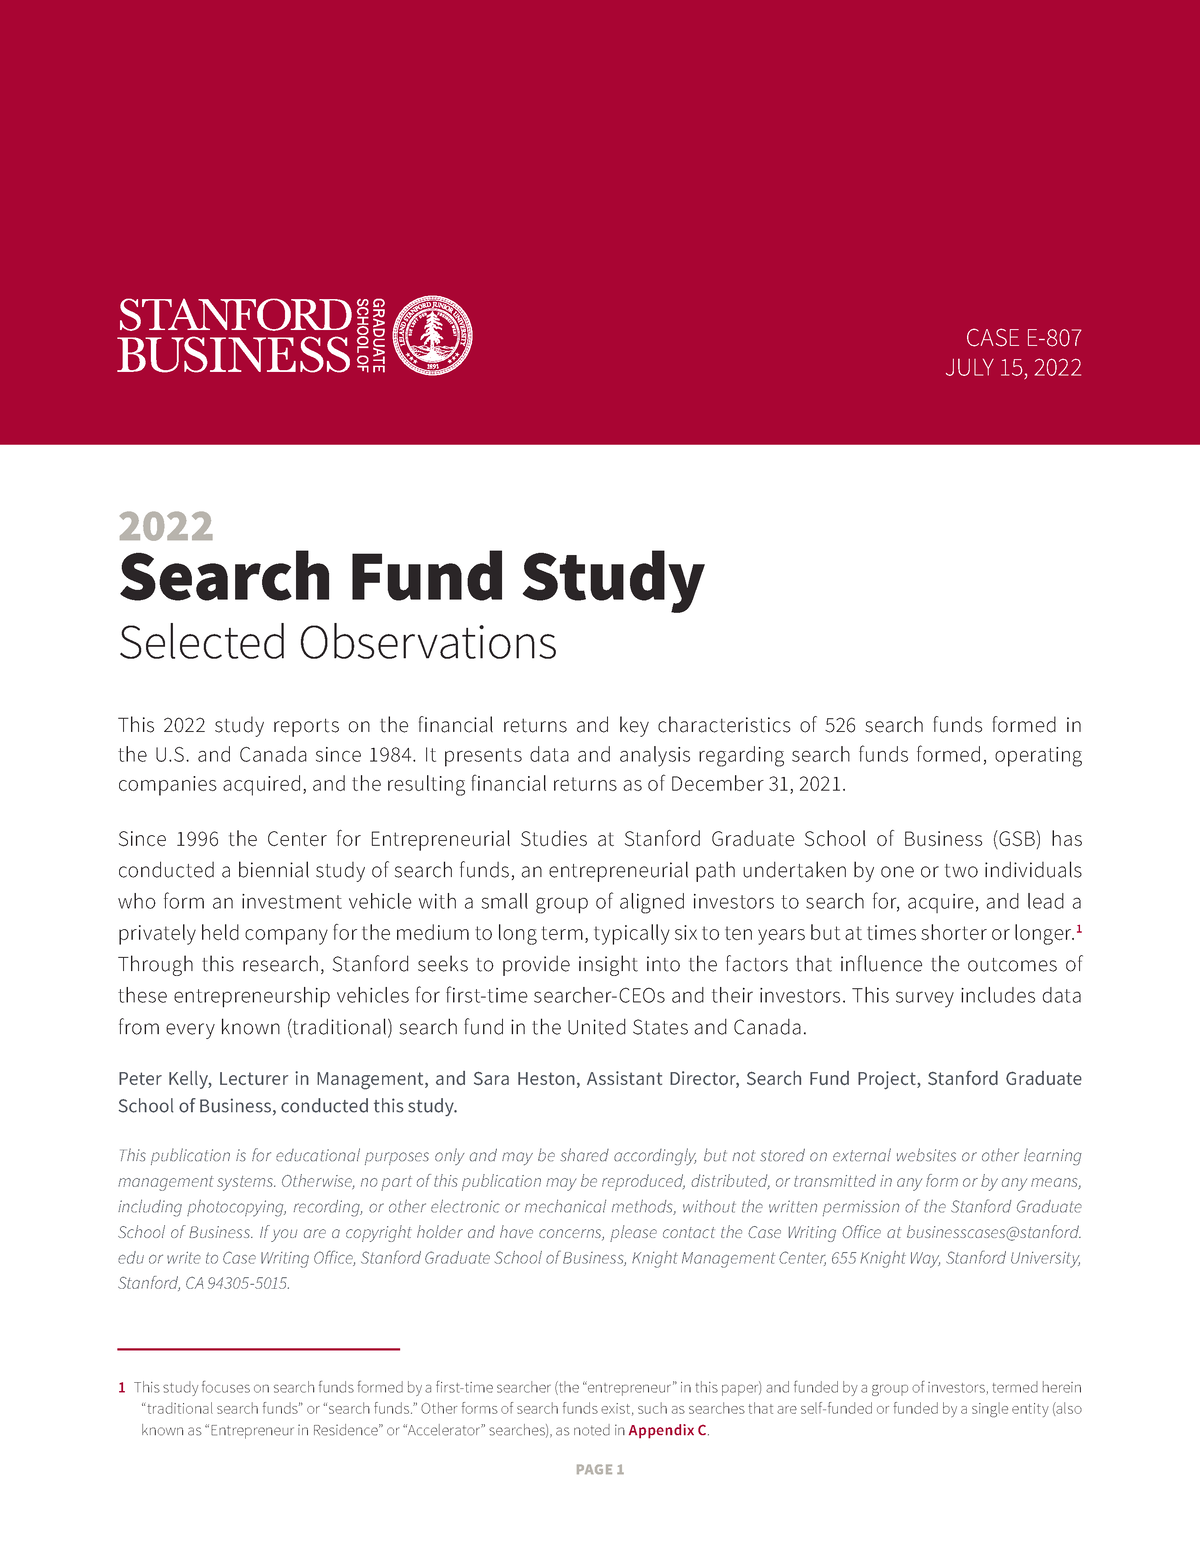 search fund case study pdf